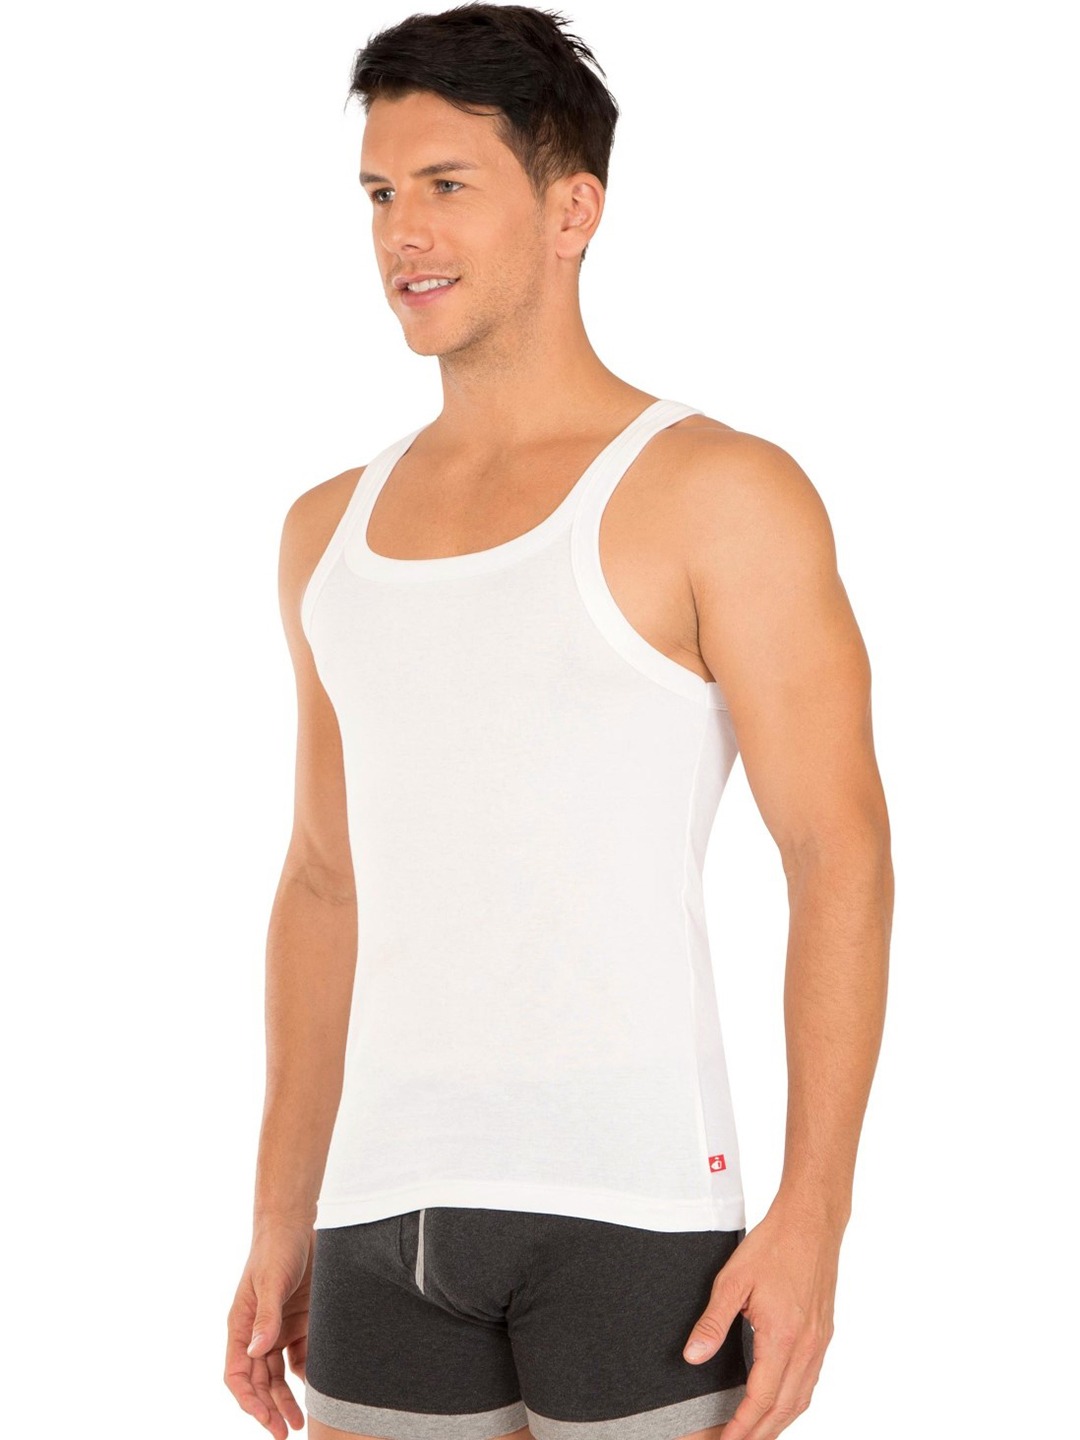 Clothing Innerwear Vests | Jockey Men White Solid Athleisure Innerwear Vest US26-0105 - OH41234